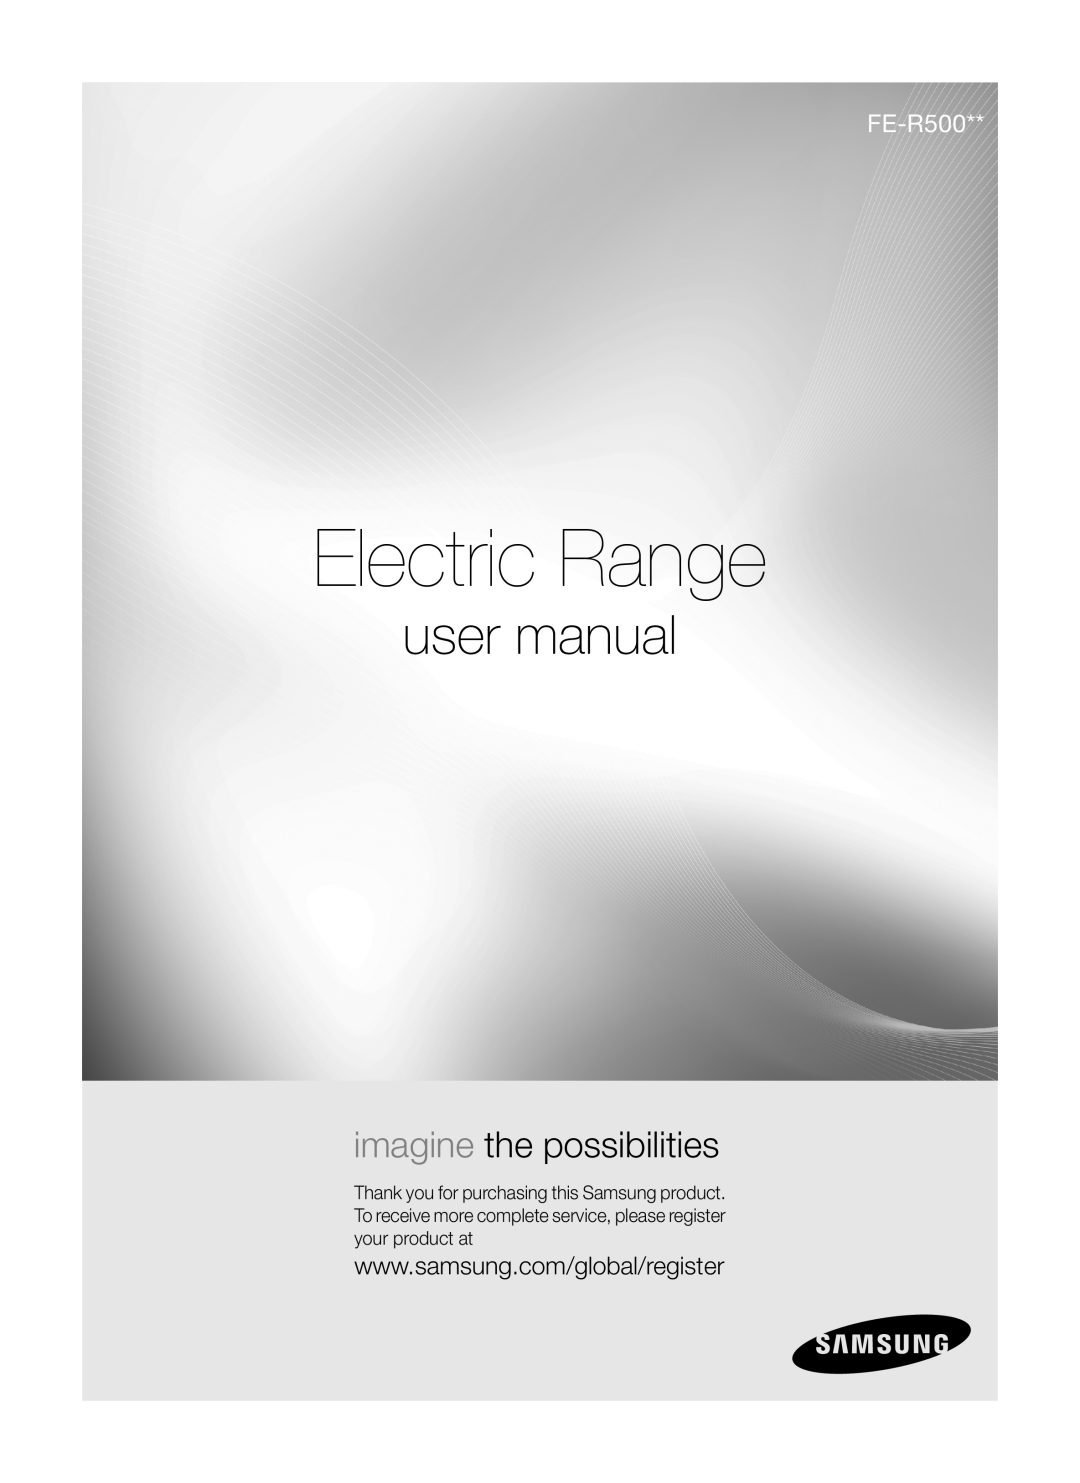 Samsung FE-R500WW user manual Electric Range, imagine the possibilities 